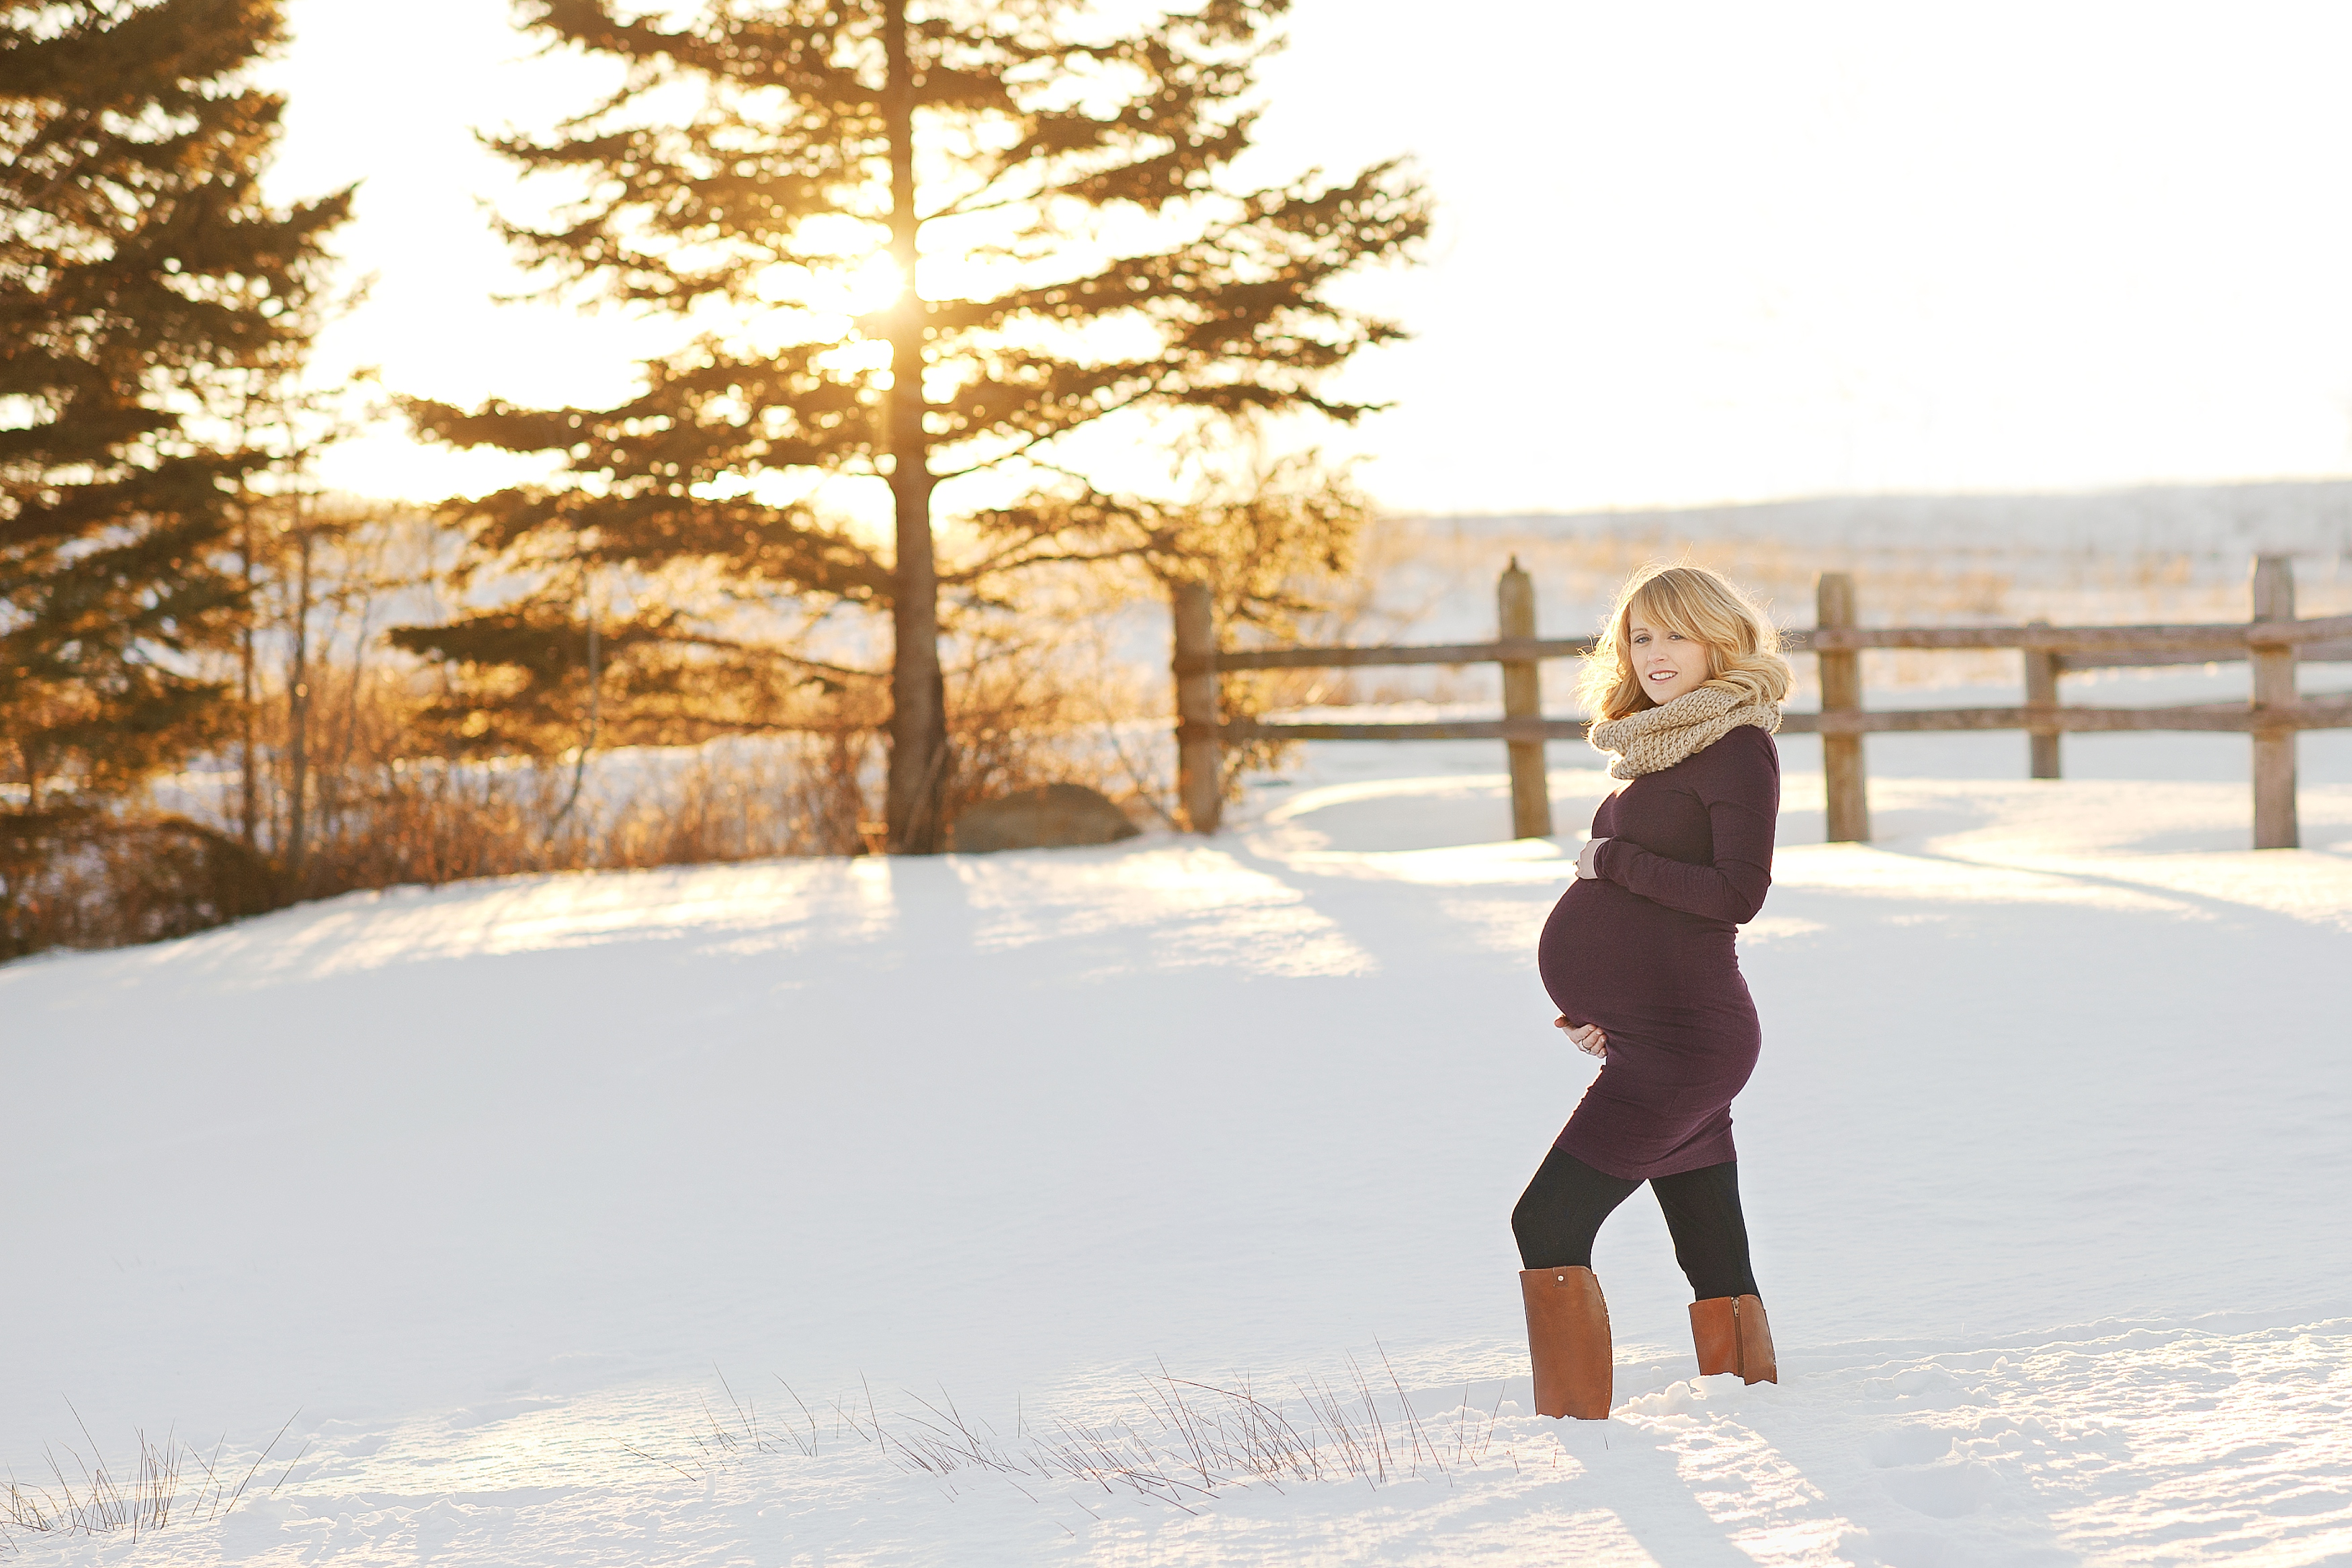 Halifax maternity photographer | Samantha Covert Photography